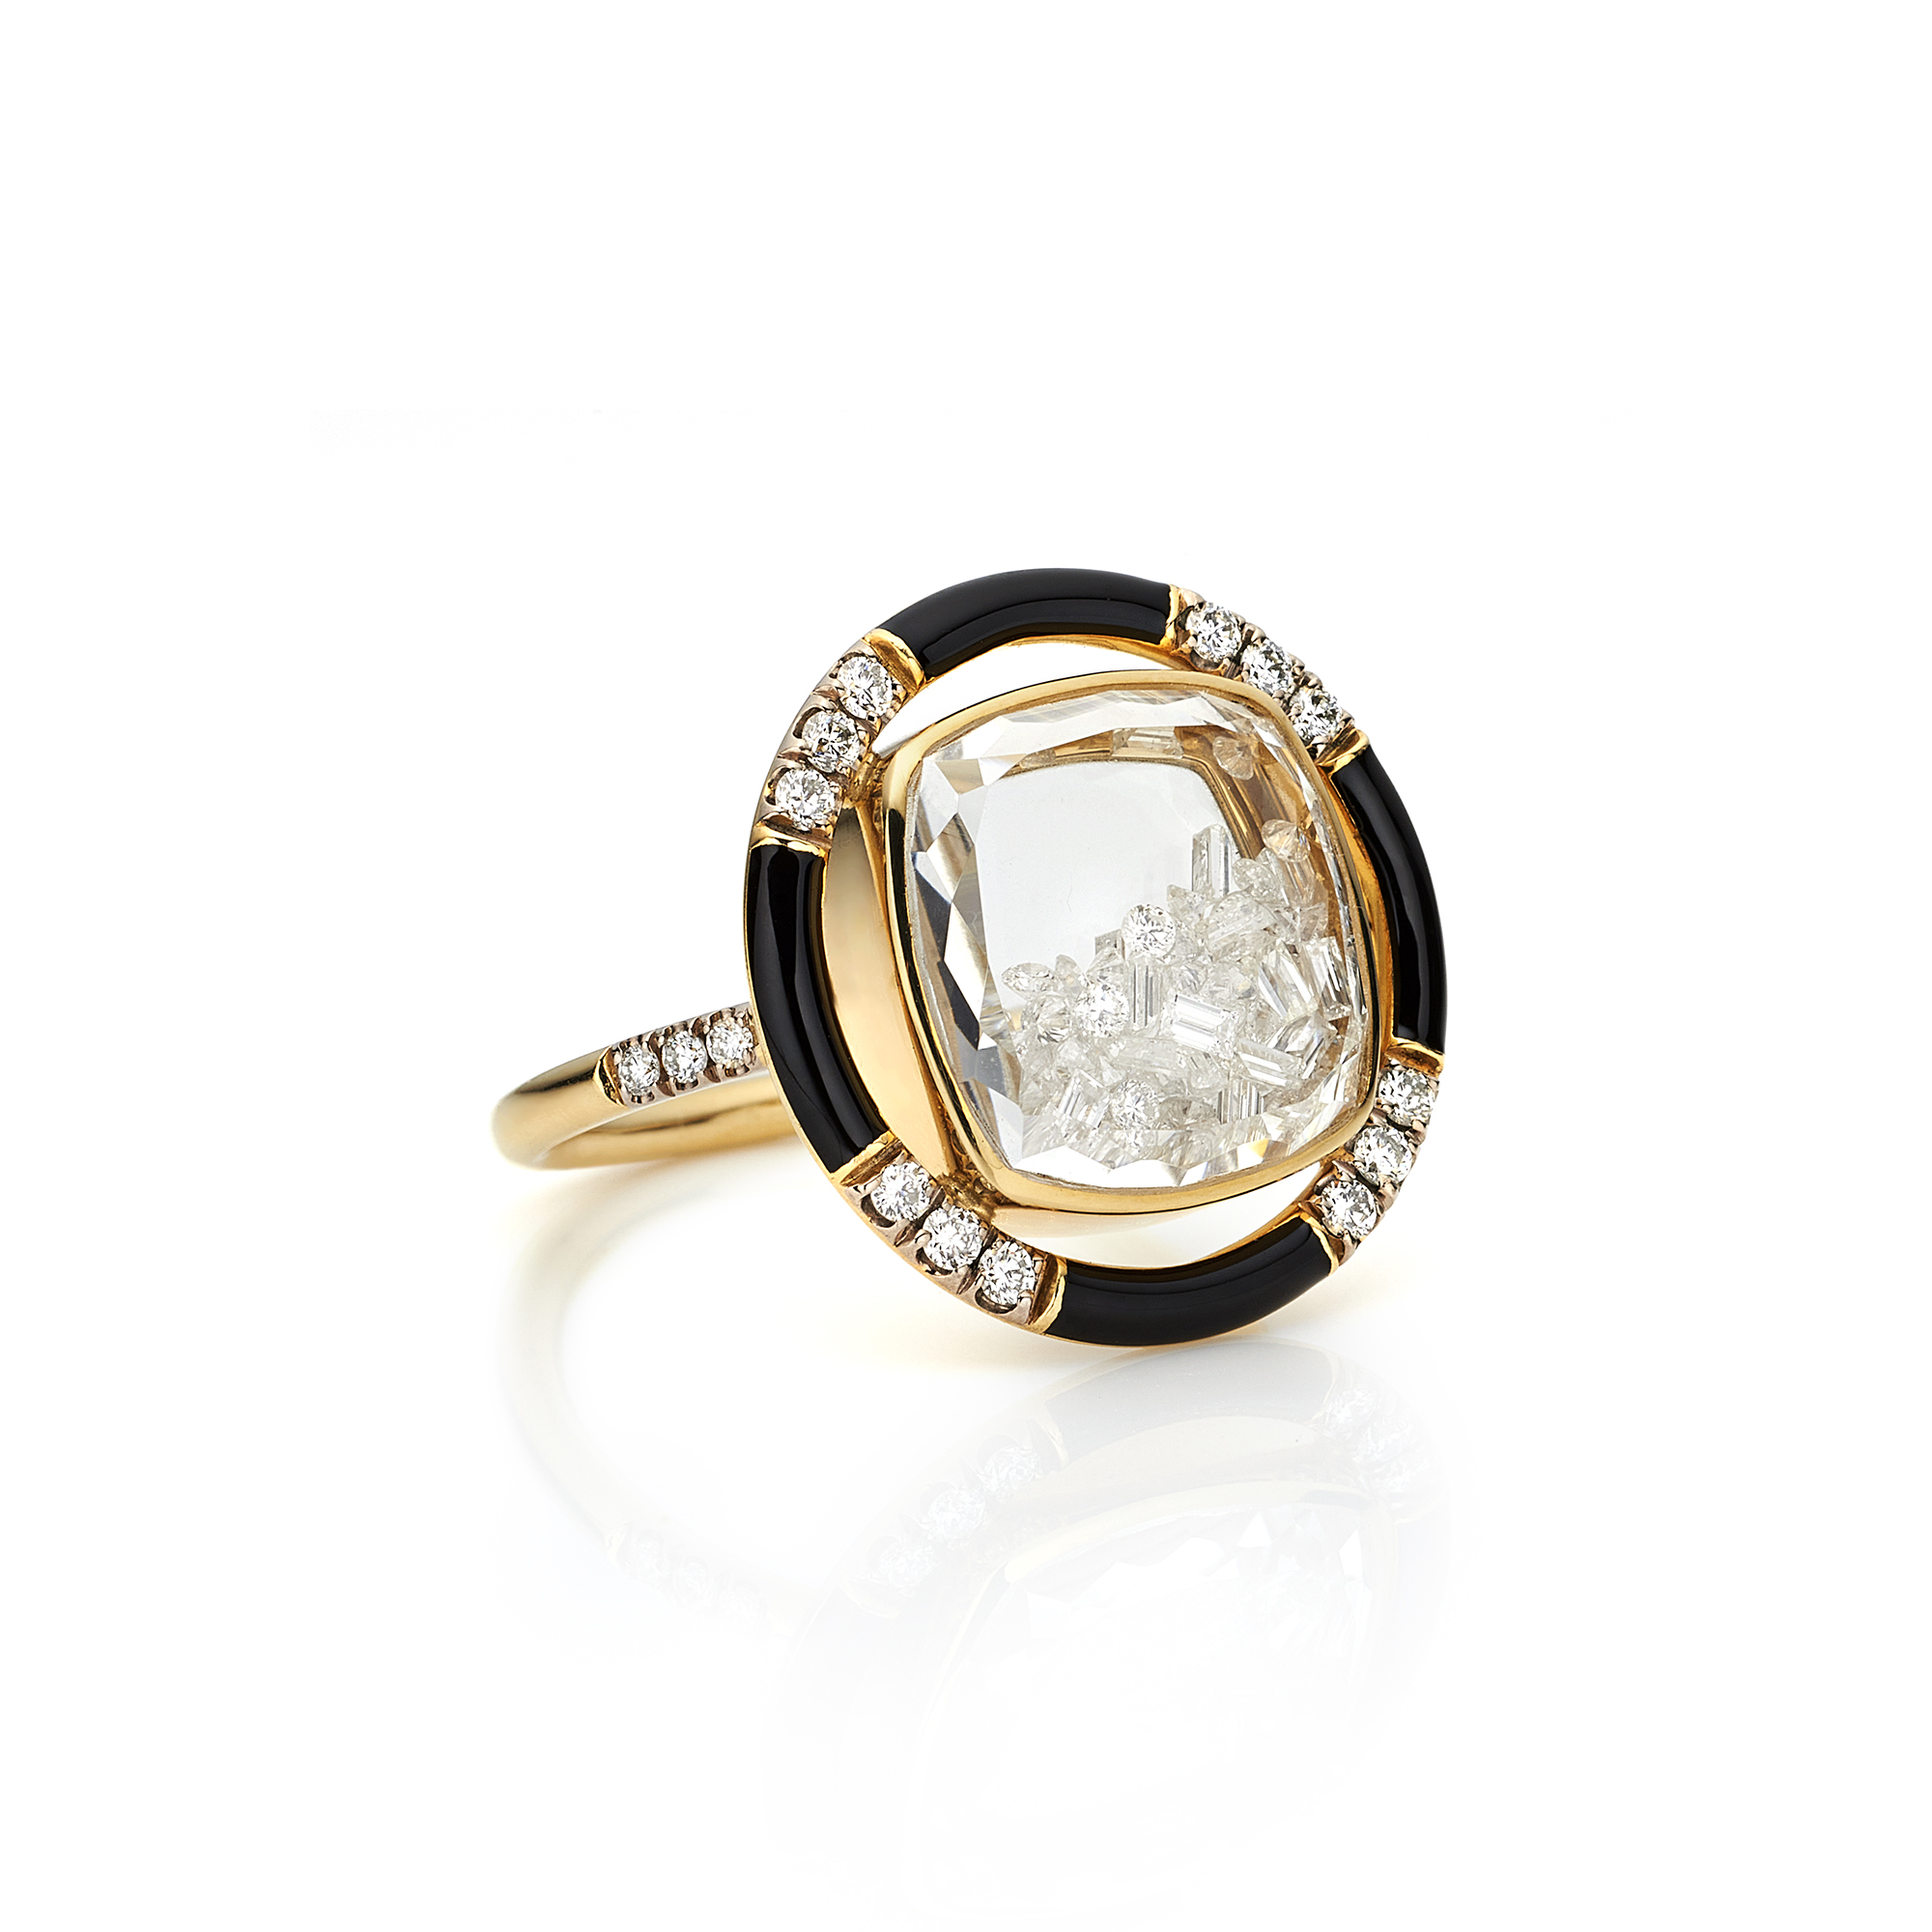 Blackened Silver Womens Jewellery Rings Moritz Glik 18k Gold Diamond And Sapphire Ring 